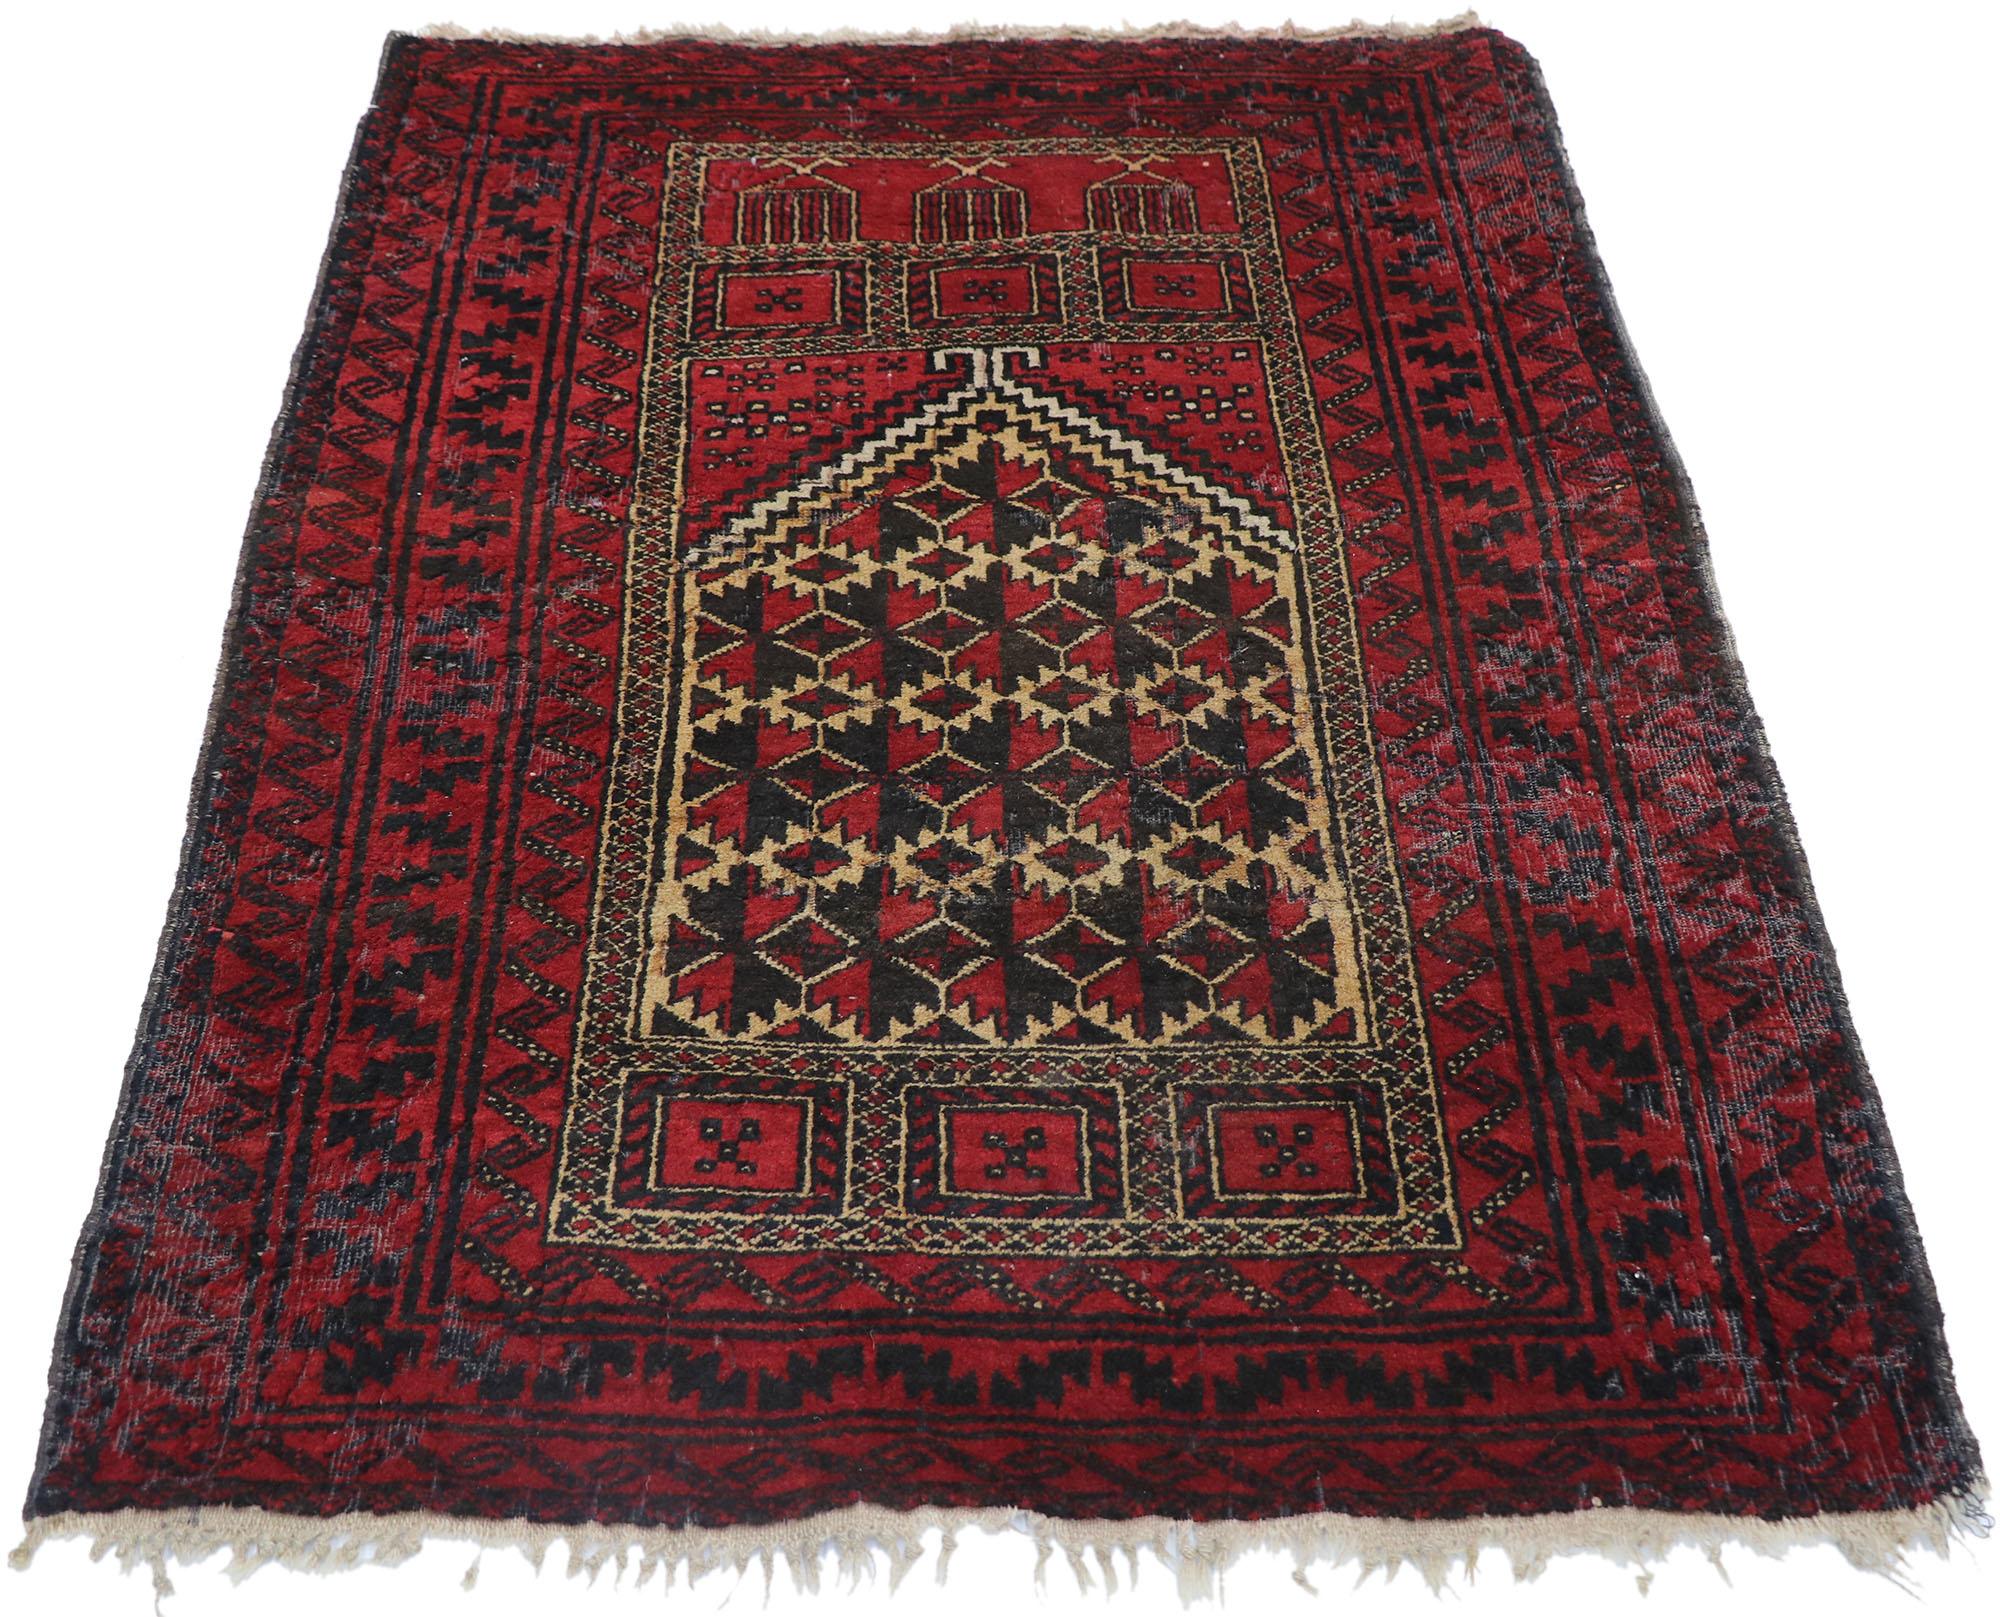 herat oriental rugs